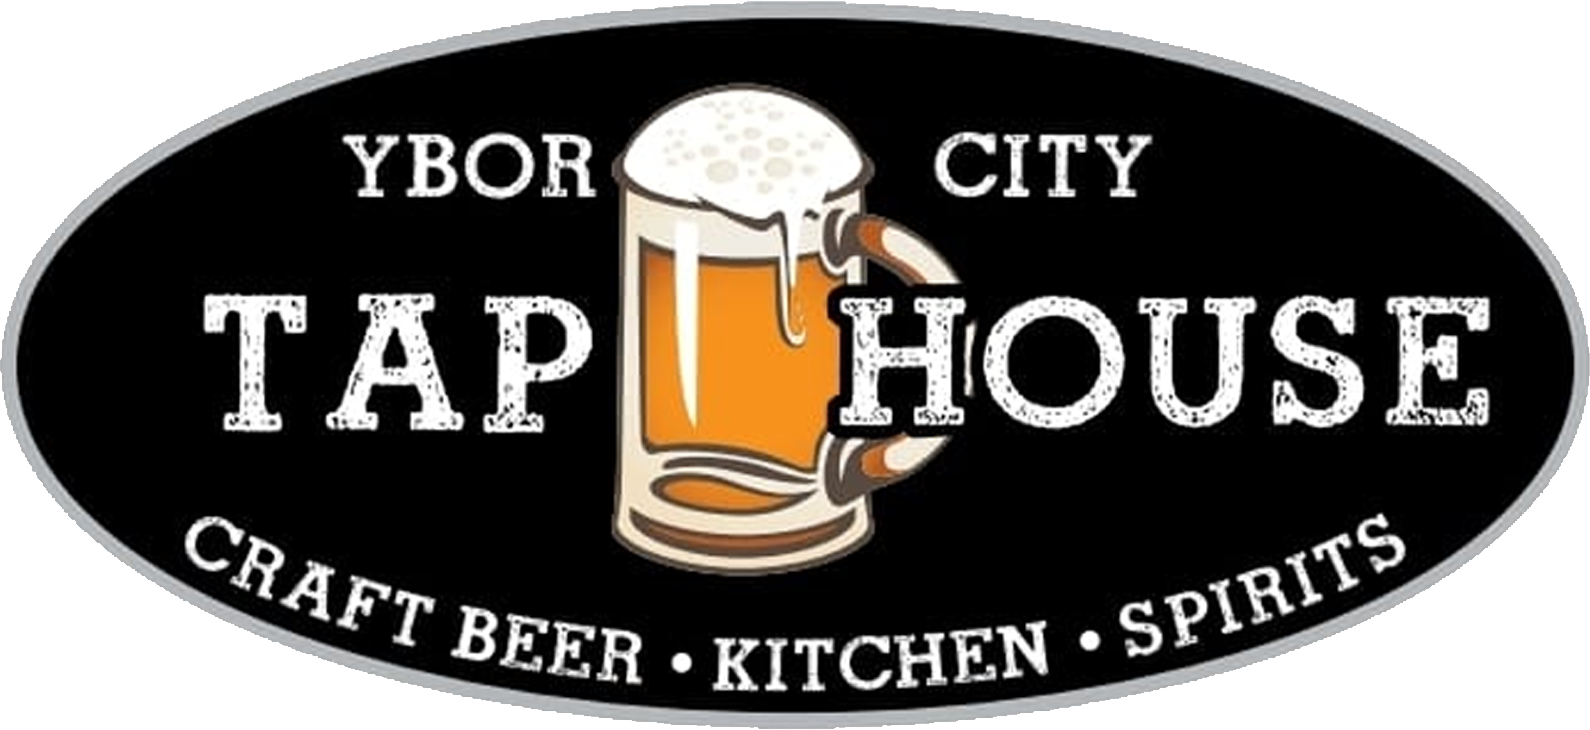 Ybor City Tap House logo scroll